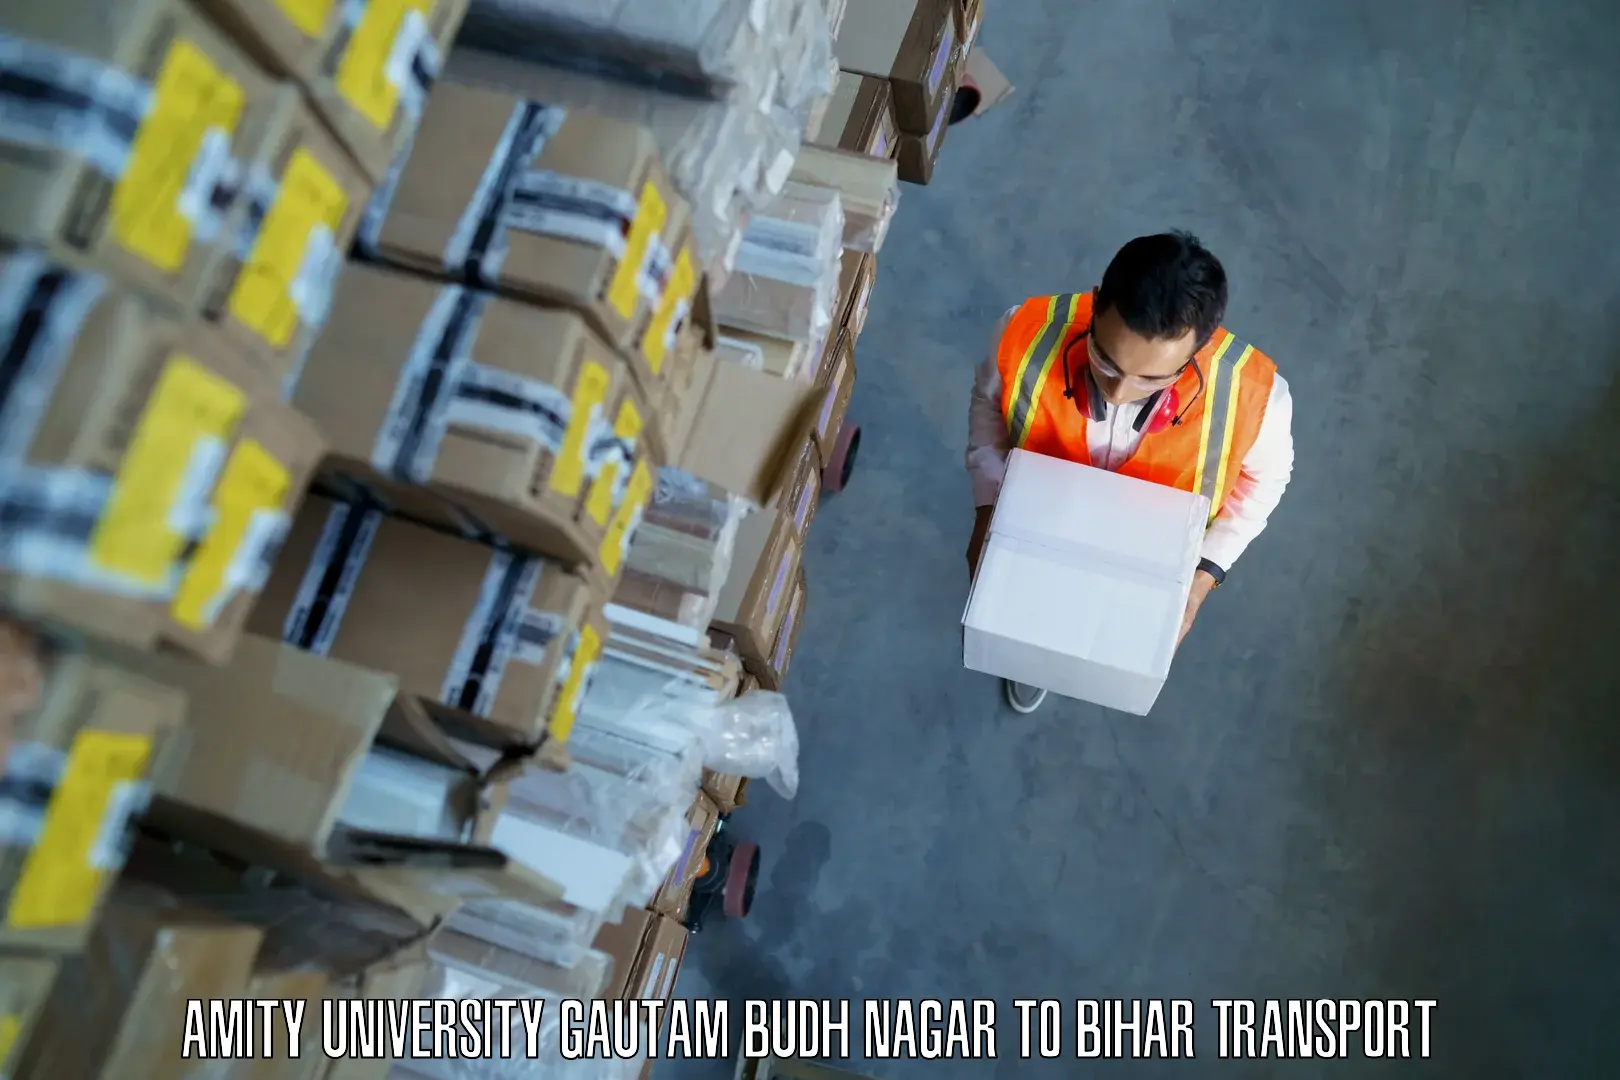 Truck transport companies in India Amity University Gautam Budh Nagar to Minapur